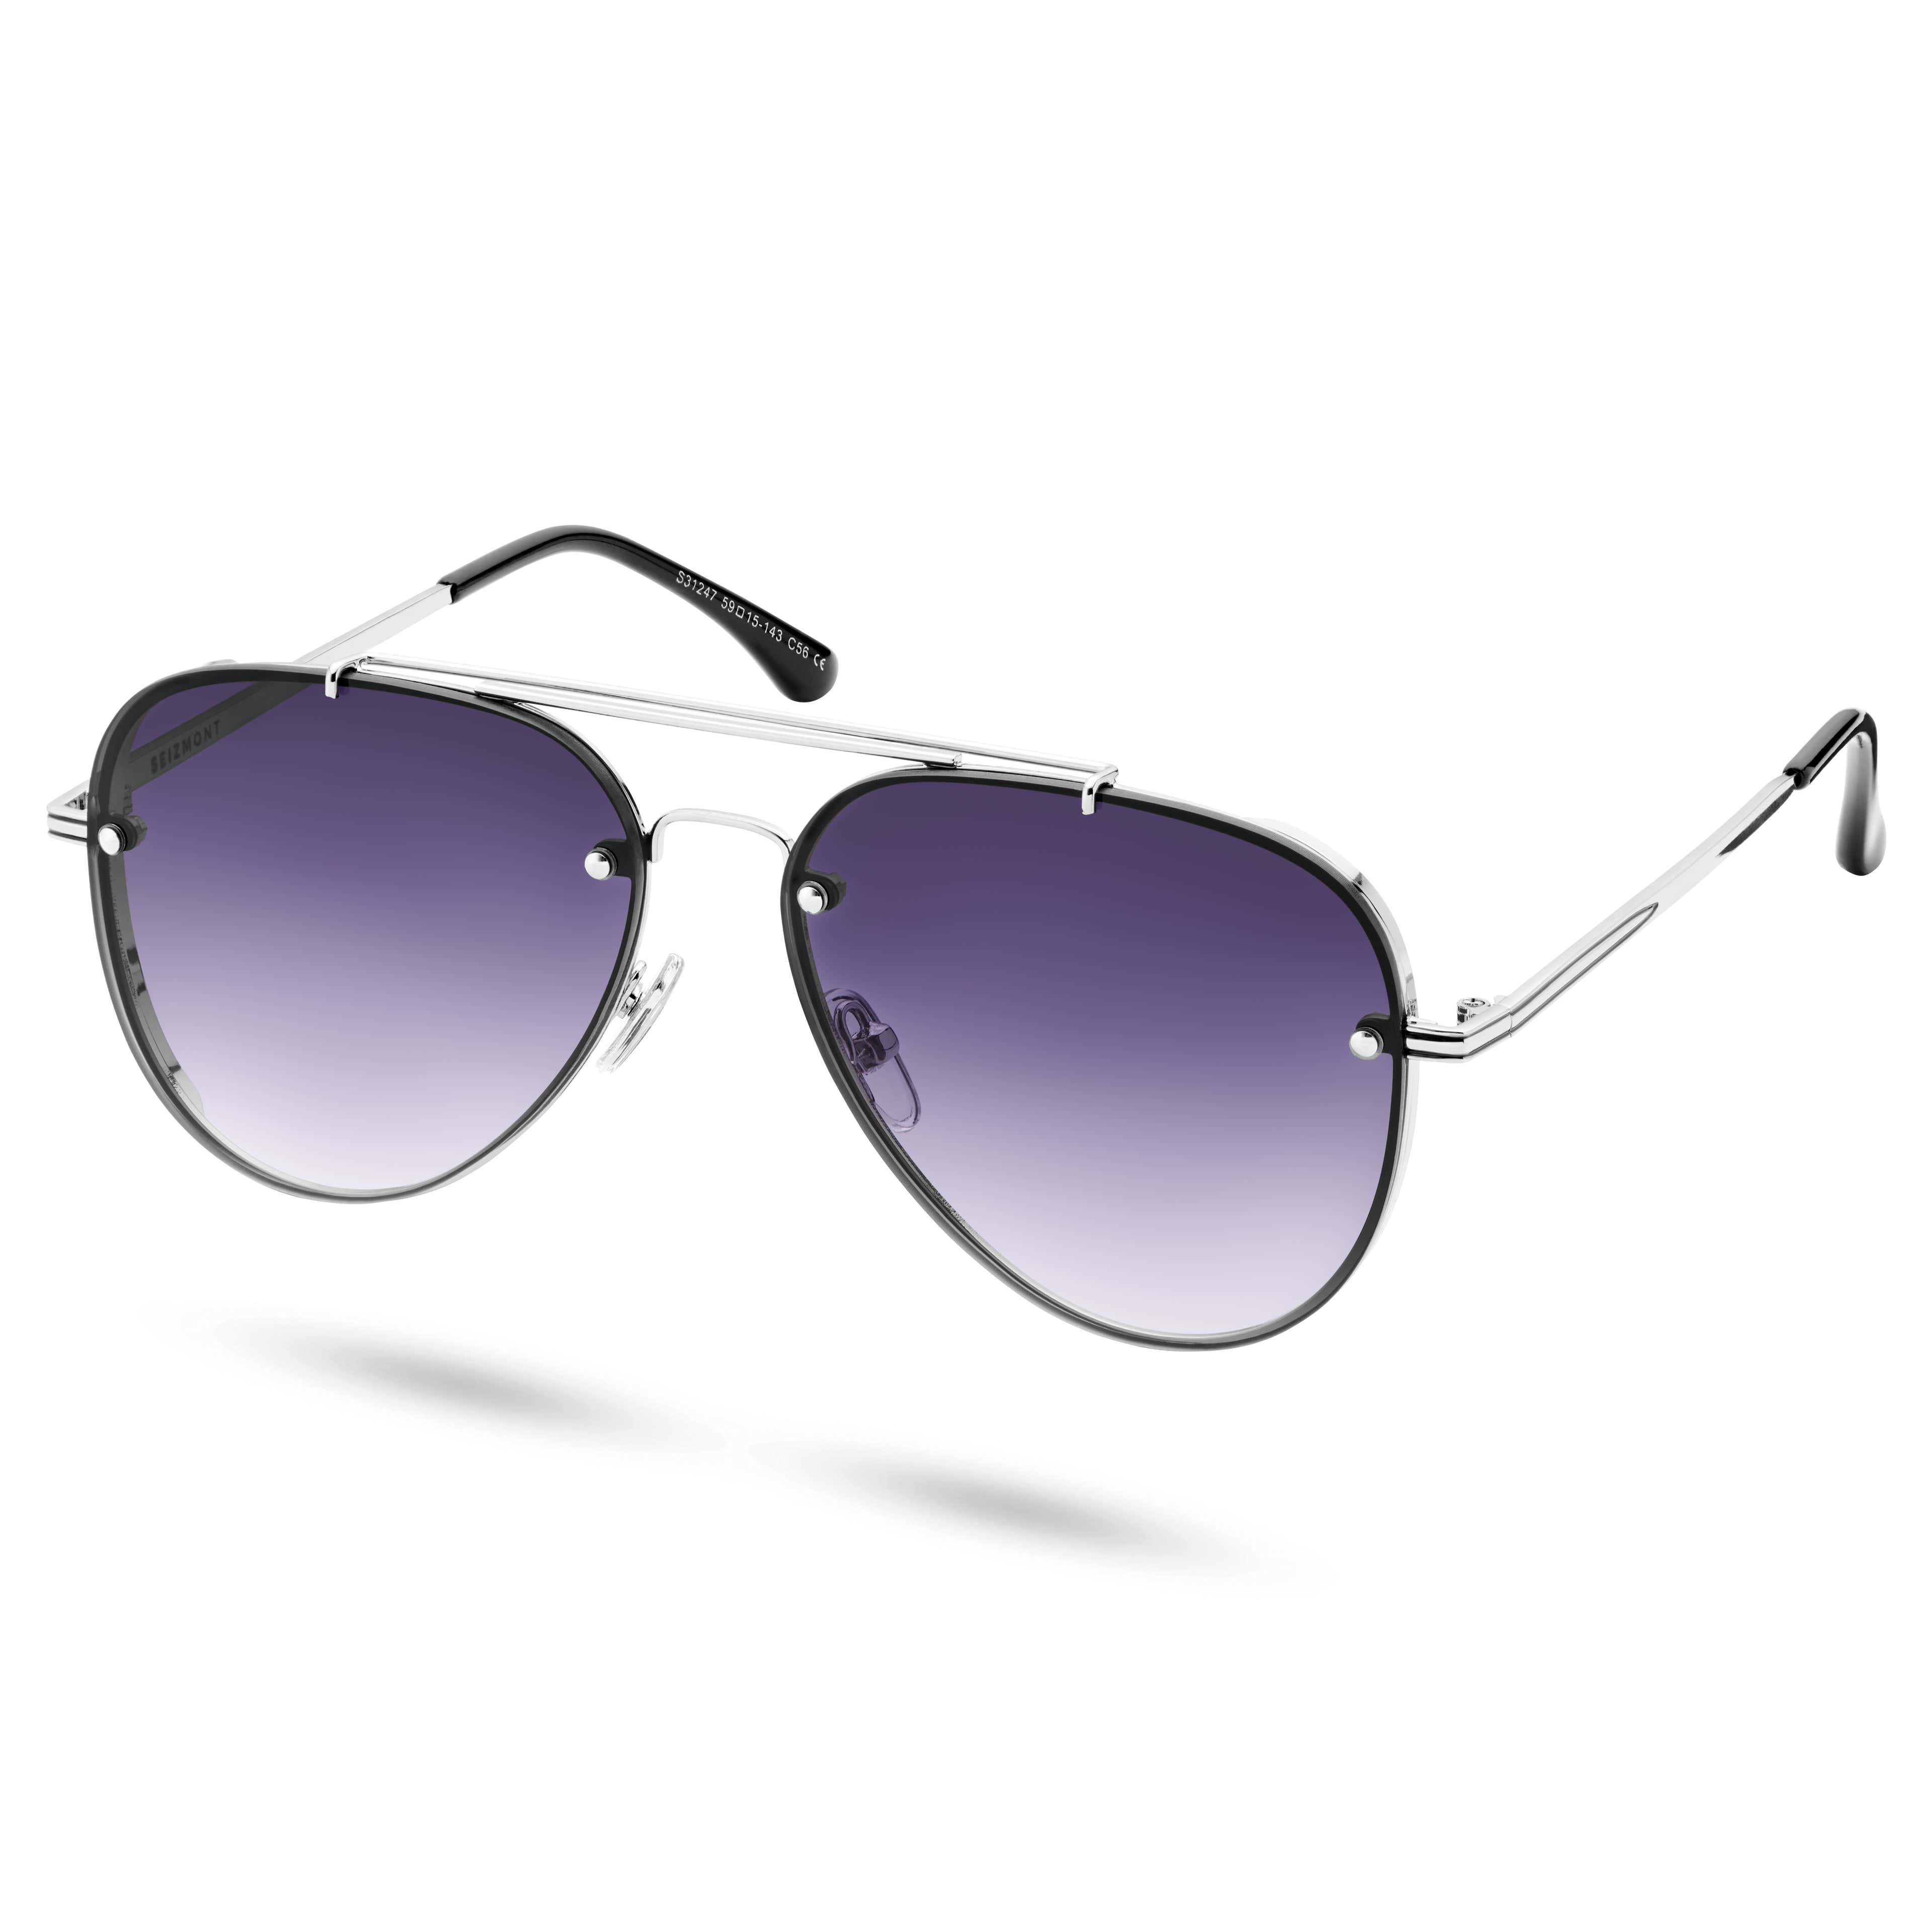 Silver-tone Smokey Black Gradient Aviator Sunglasses